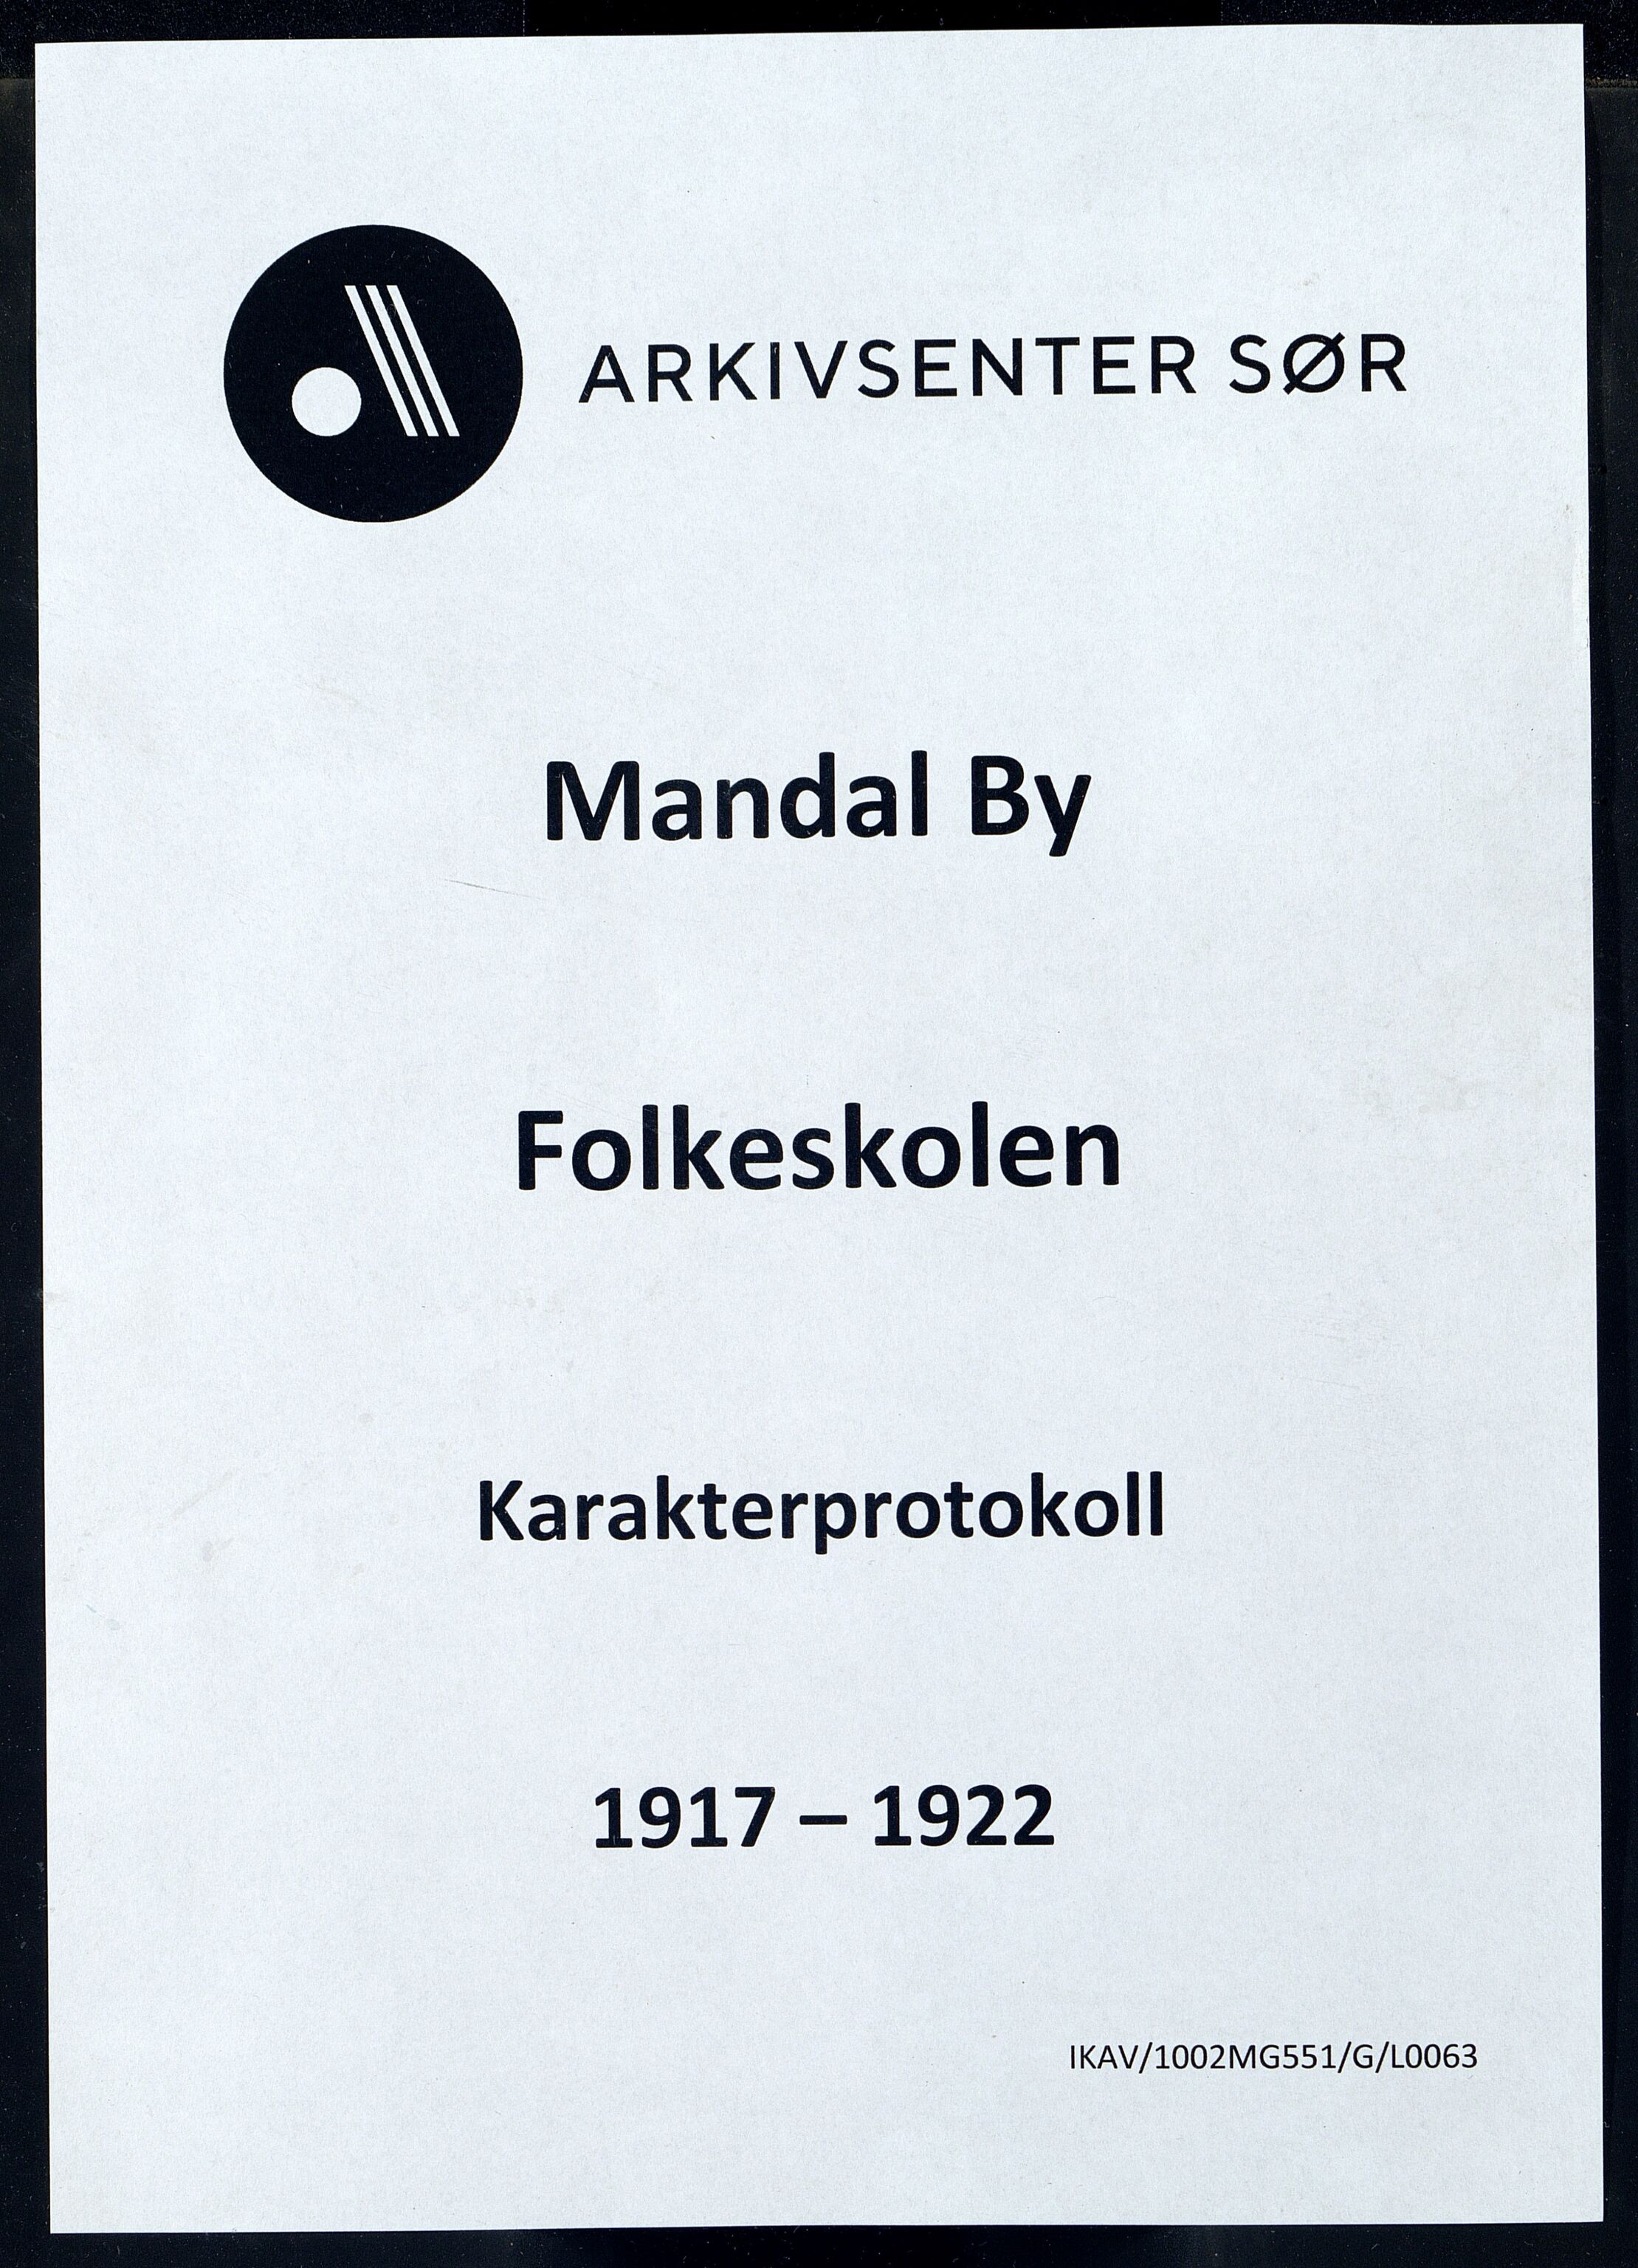 Mandal By - Mandal Allmueskole/Folkeskole/Skole, IKAV/1002MG551/G/L0063: Karakterprotokoll, 1917-1922